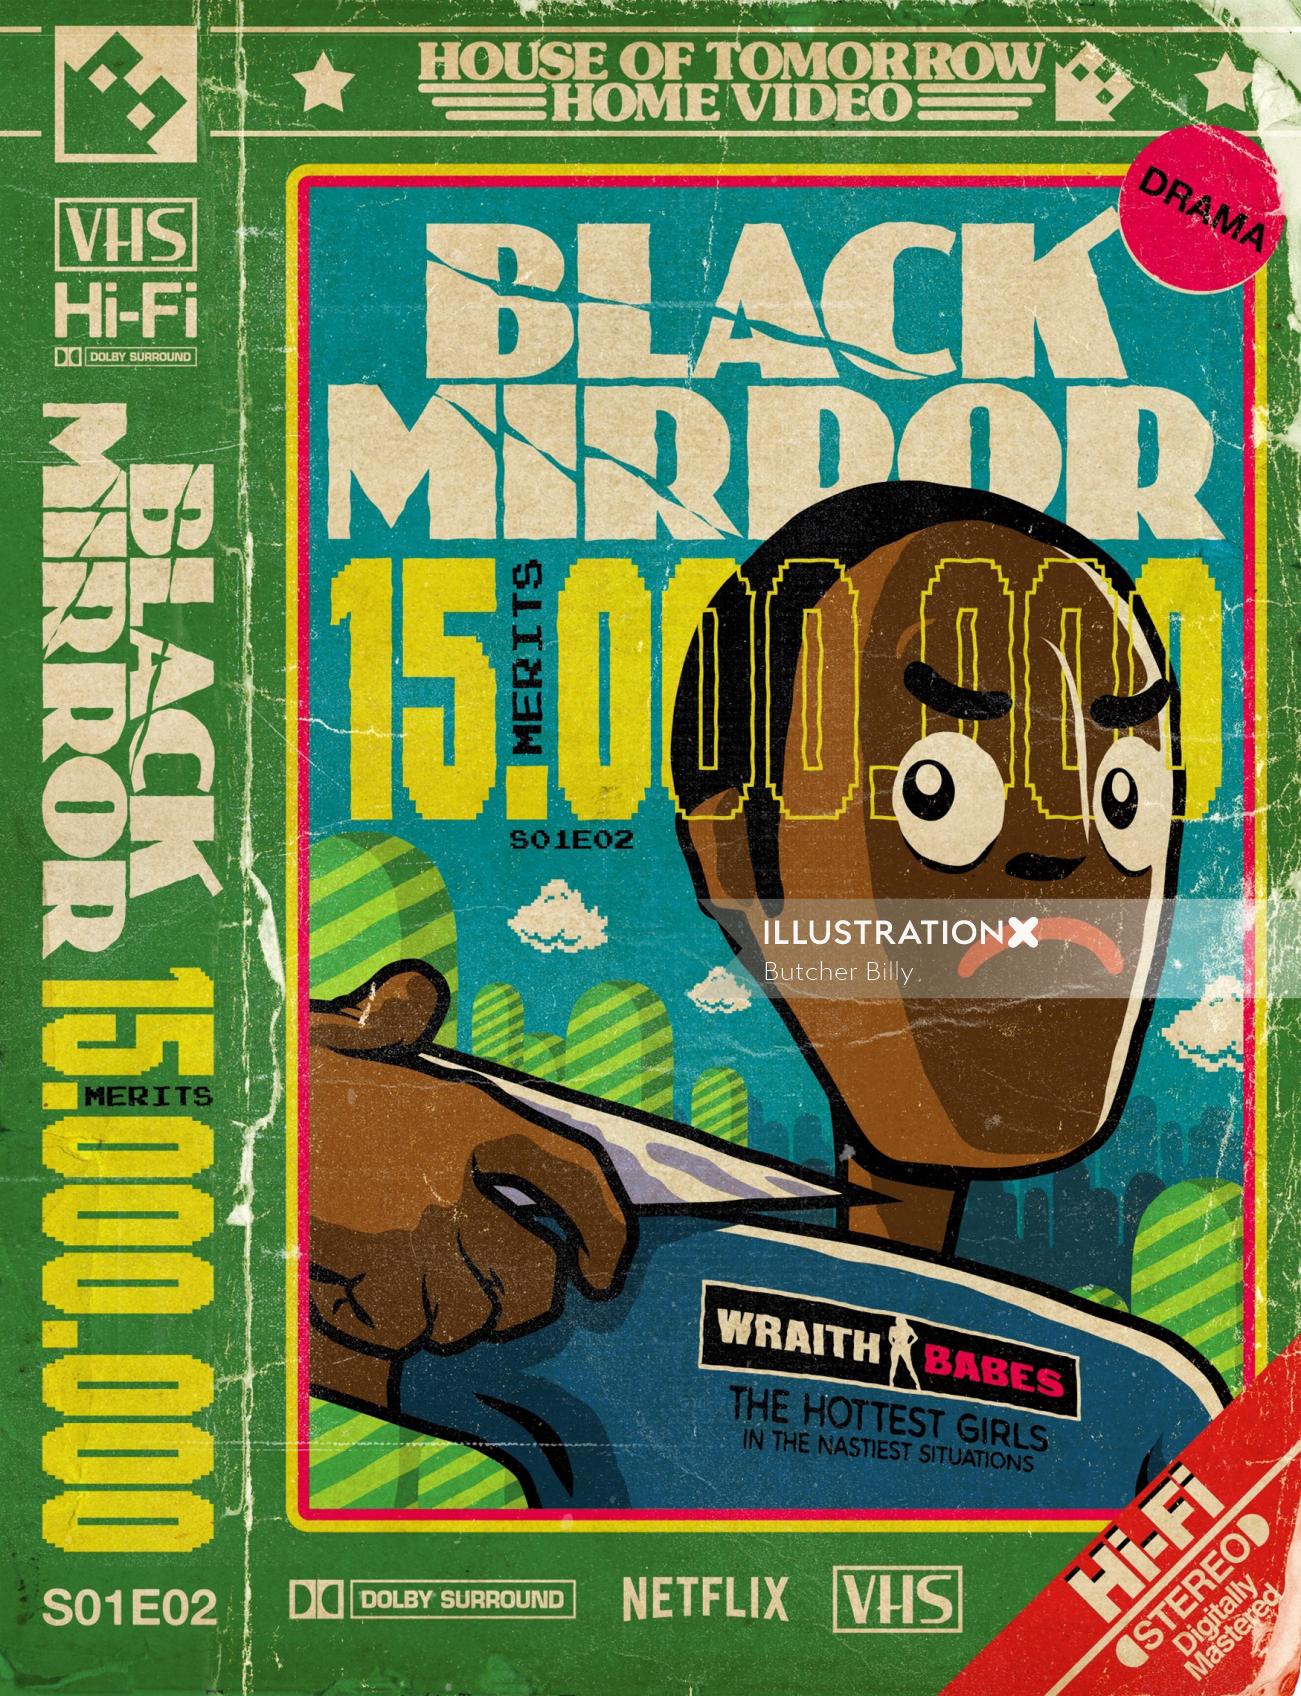 Cover design for Black Mirror Fifteen Million Merits book